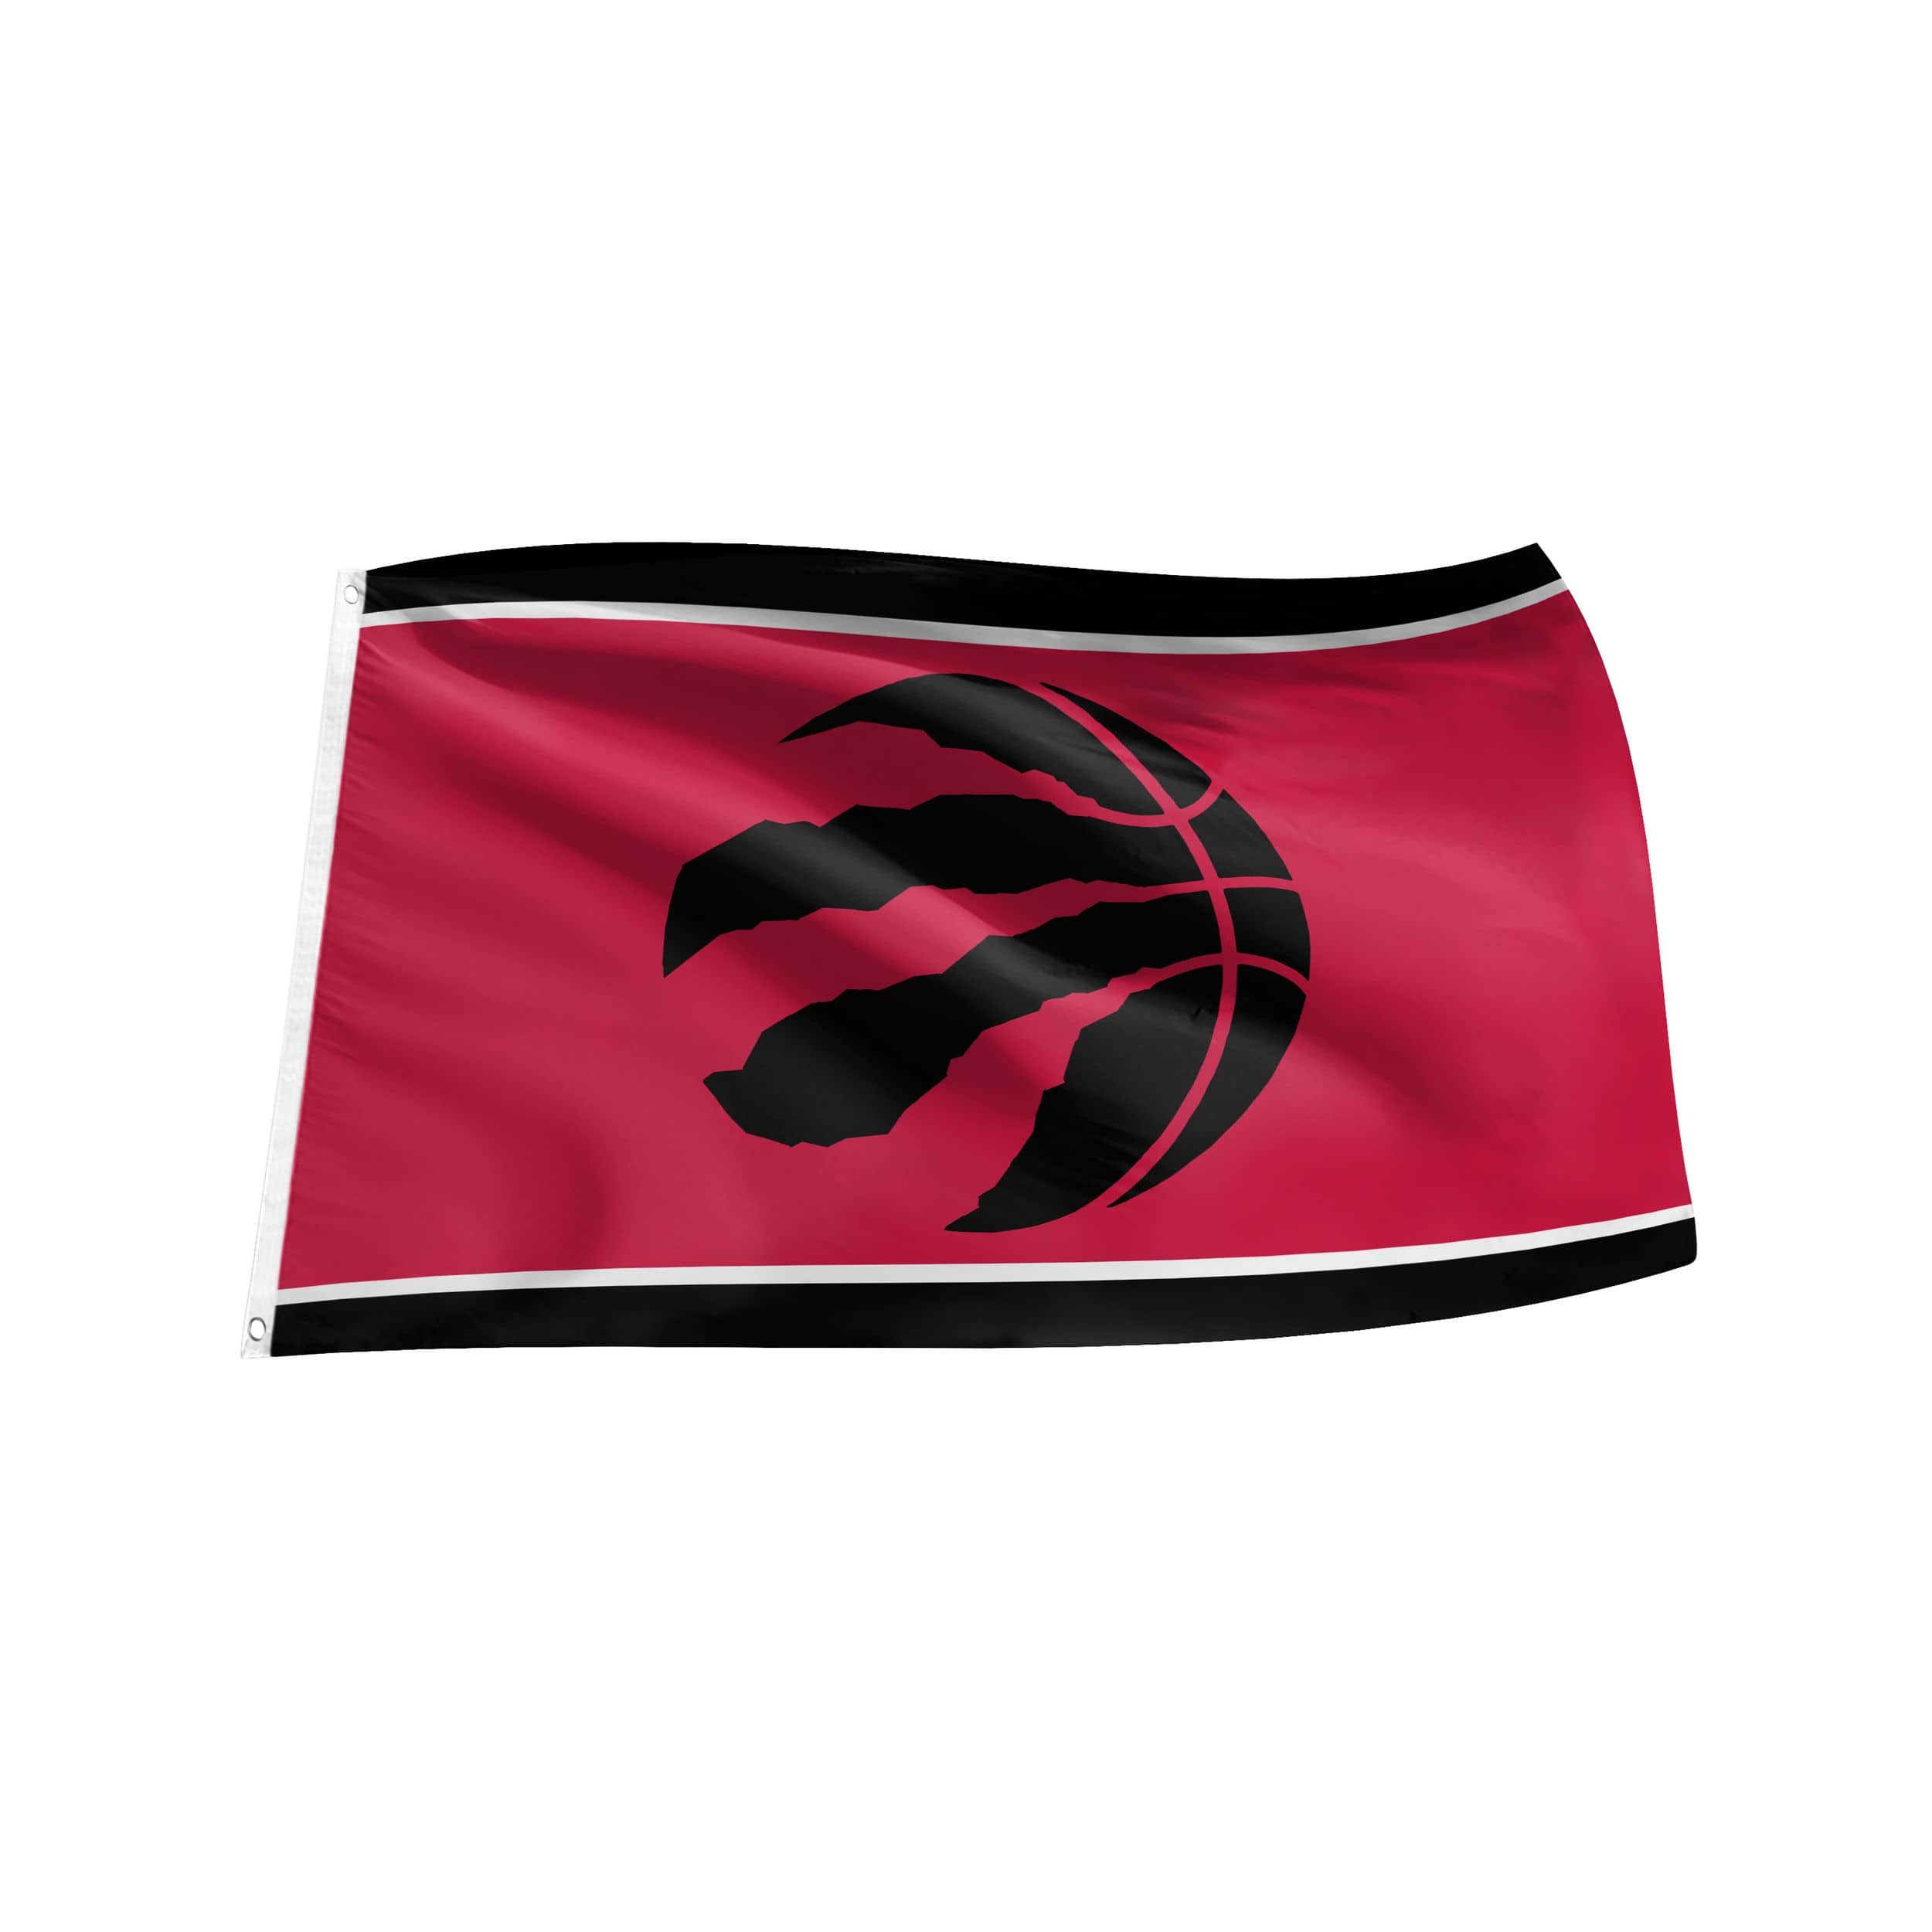 Toronto Raptors Team Flag For NBA Basketball Fans/Collectors, 3-ft x 5-ft